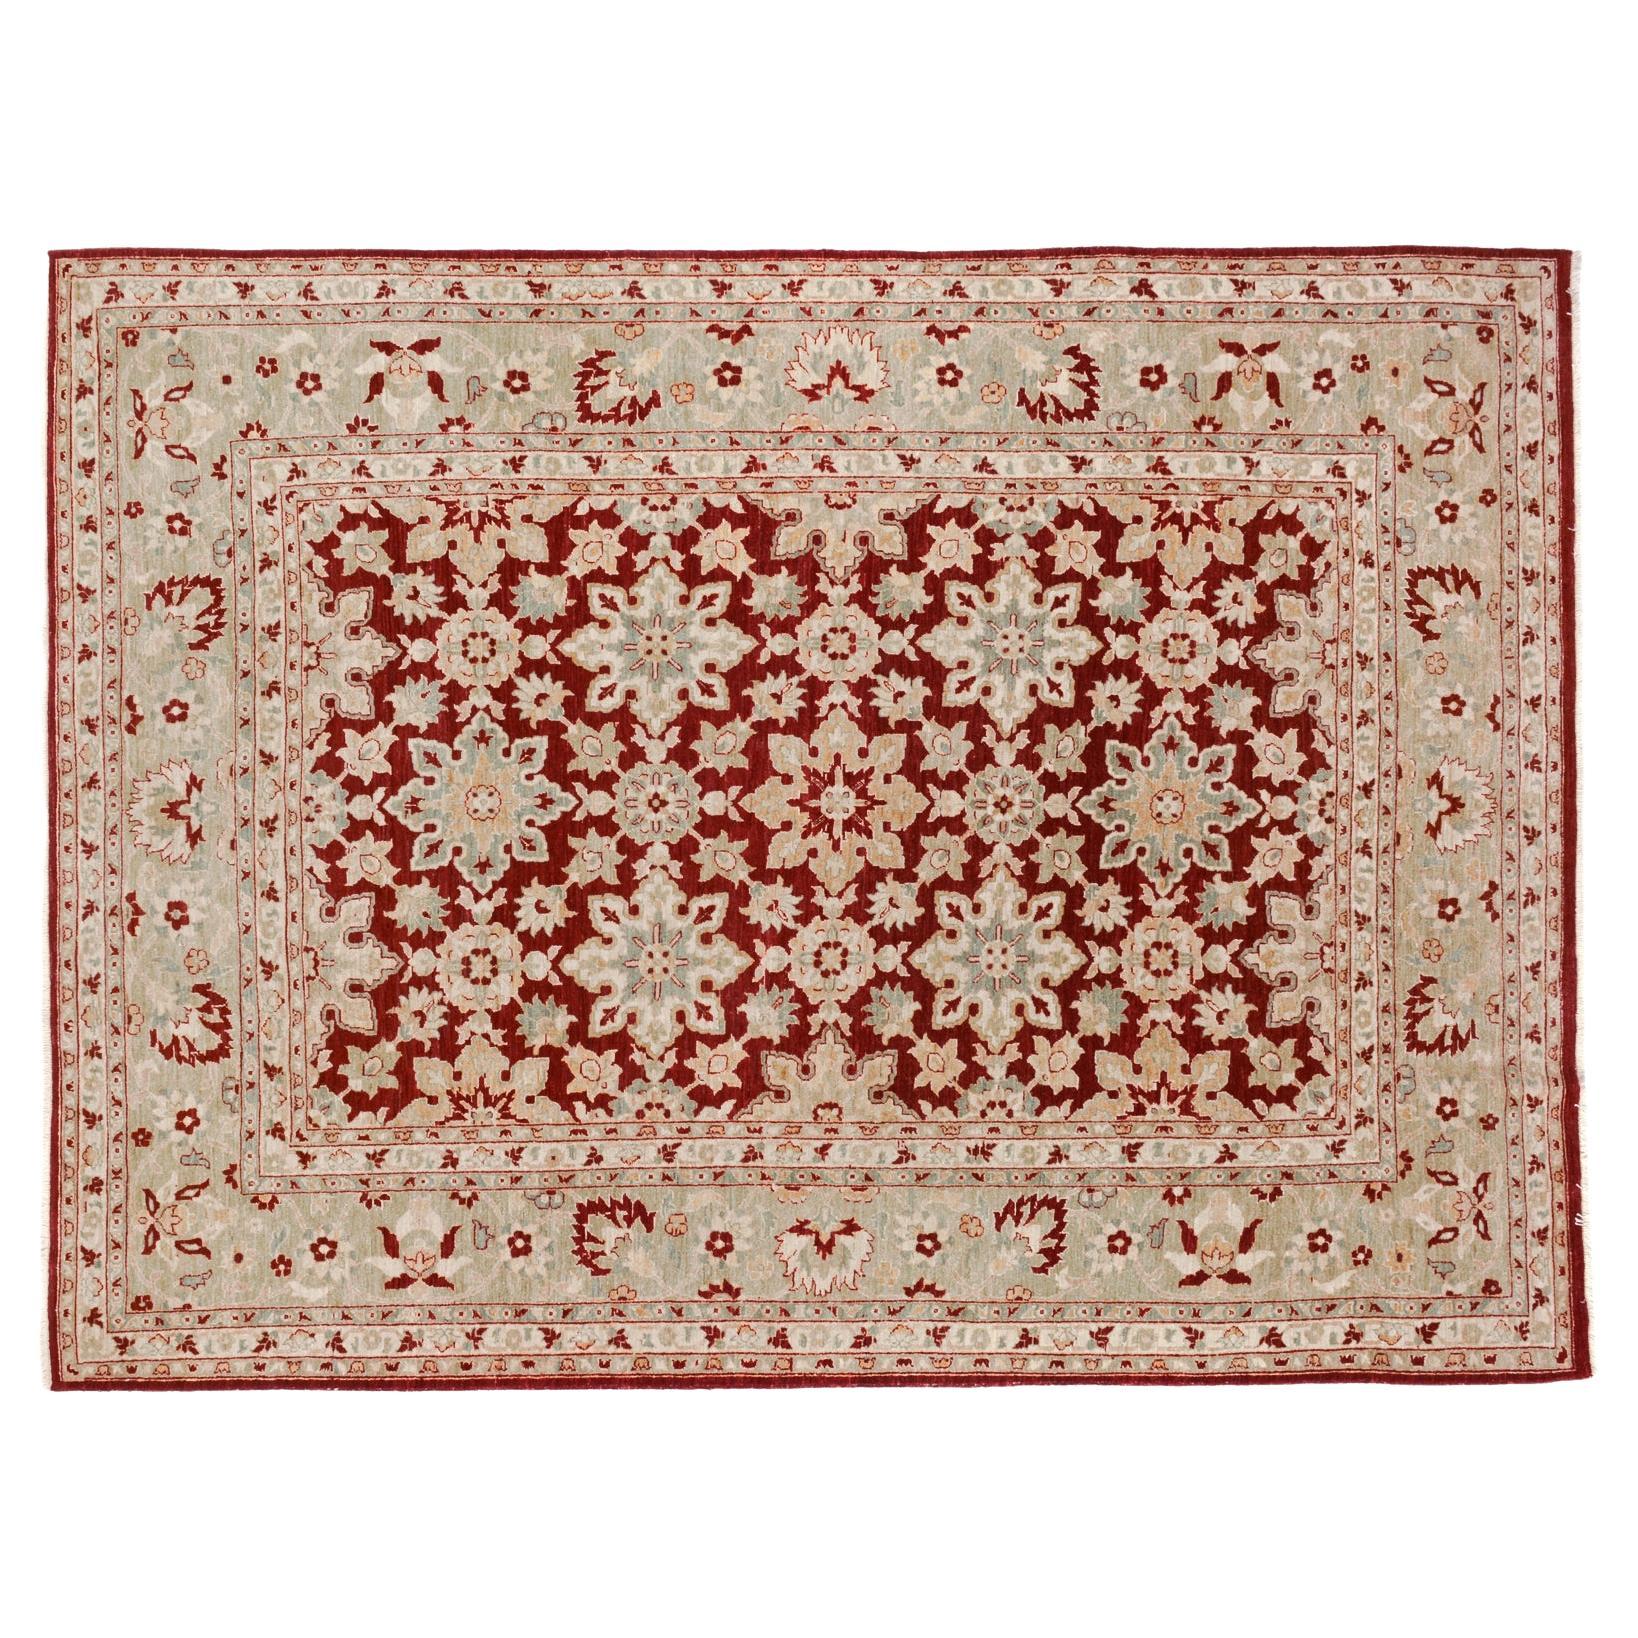 9'x12' Persian Design Reds Floral Rug